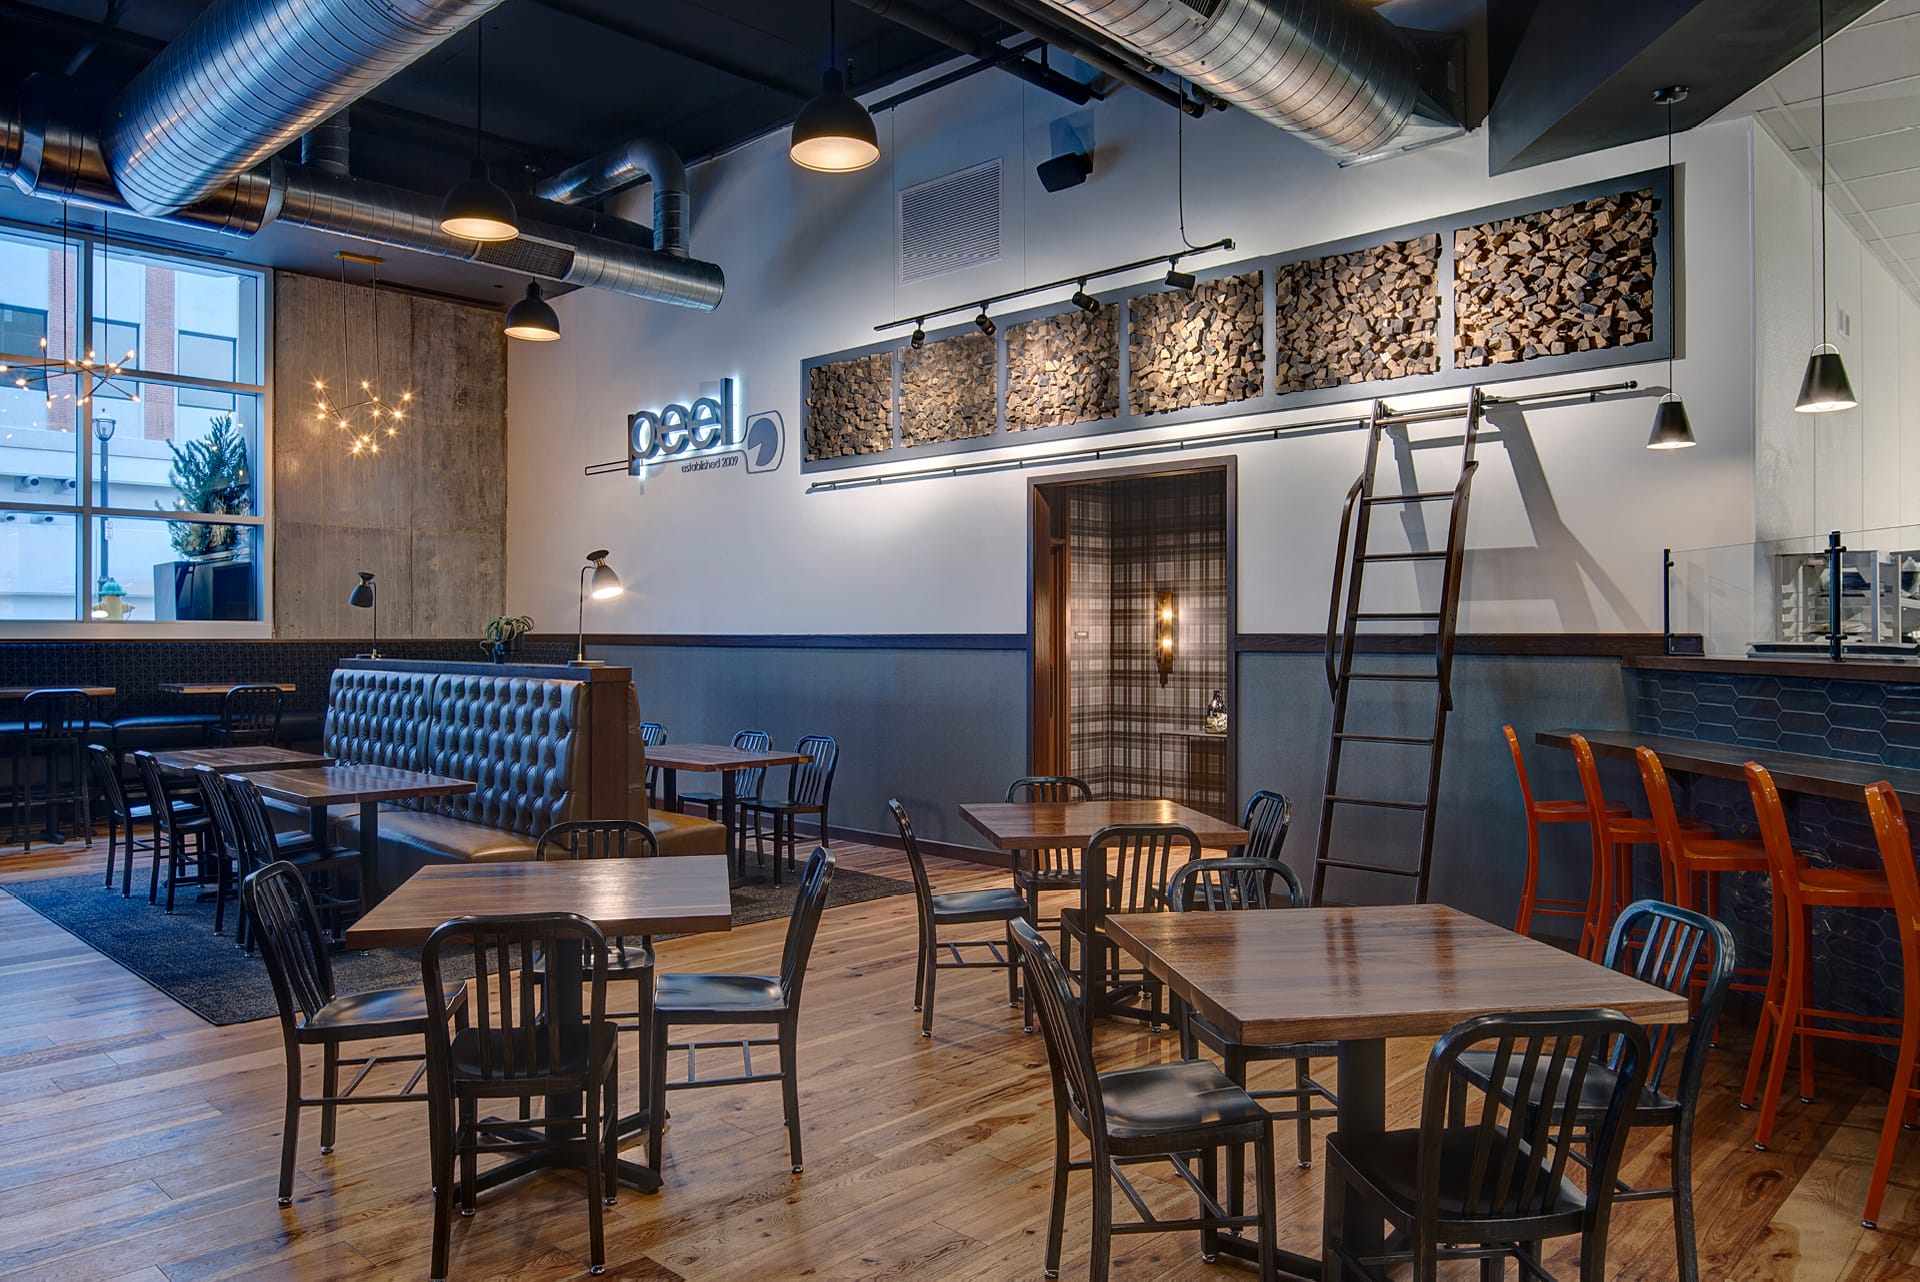 Peel Wood Fired Pizza architecture interior design retail restaurant